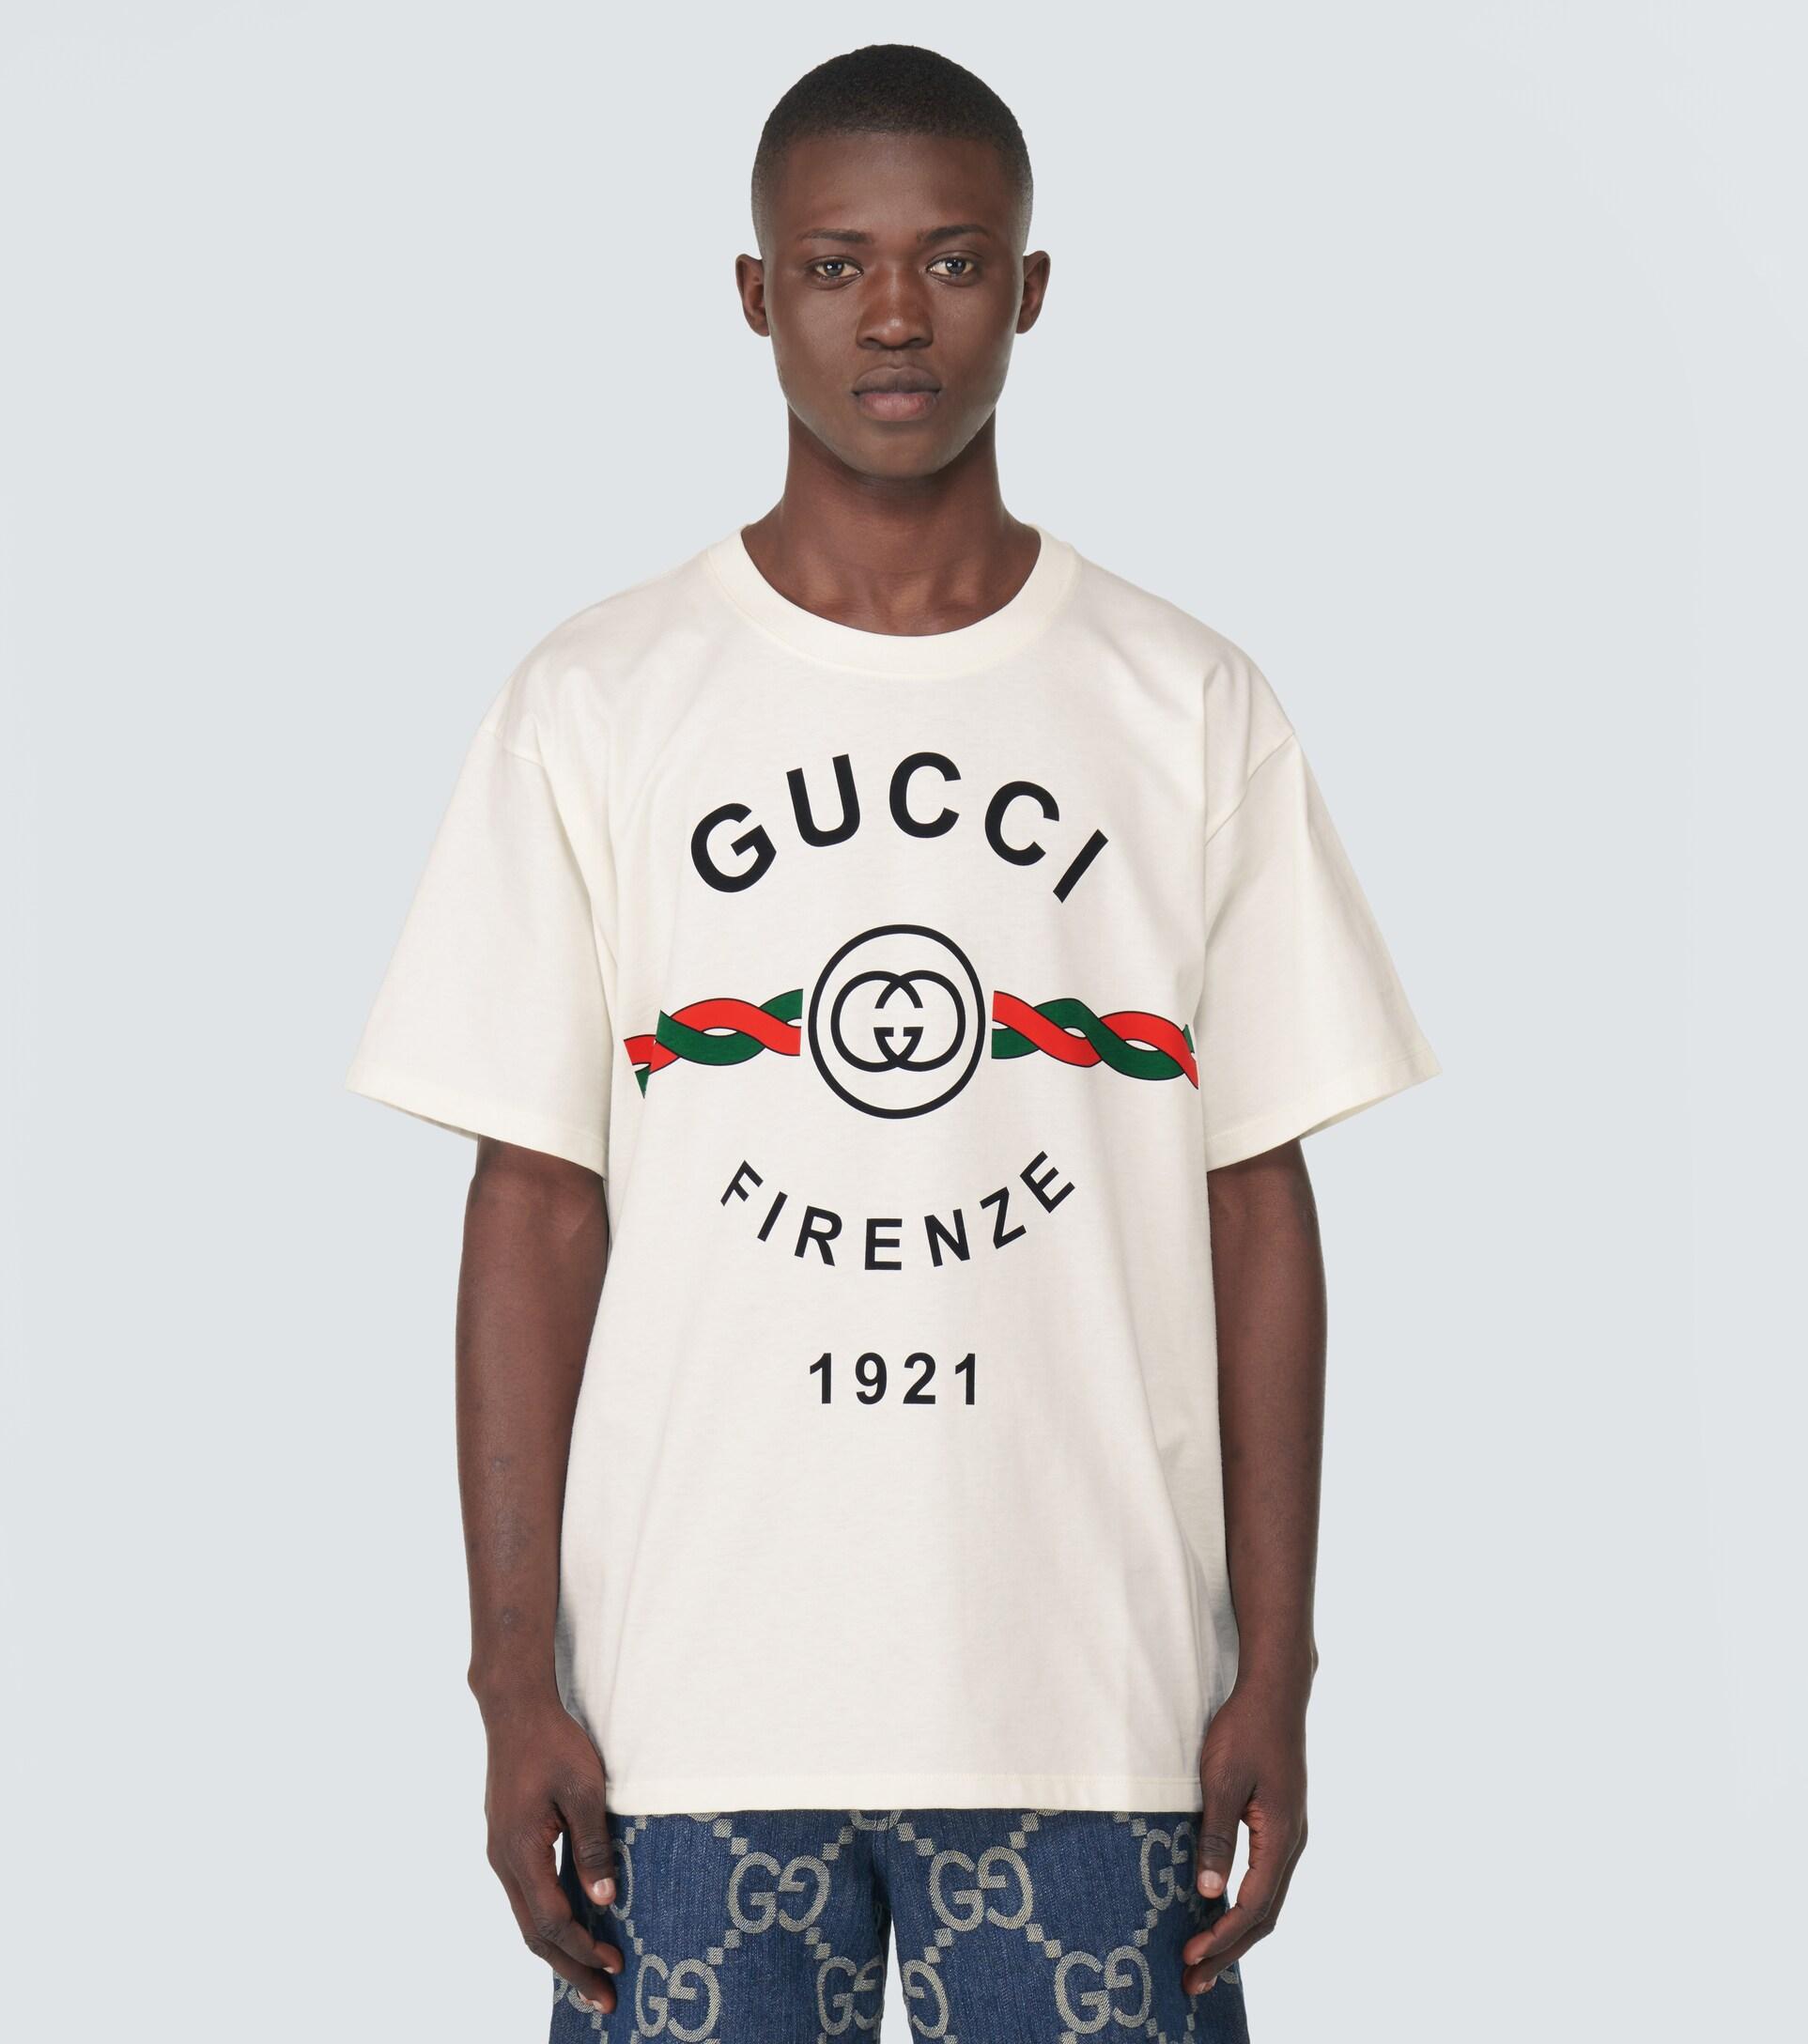 Gucci Firenze 1921 Cotton T-shirt for Men - Save 6% | Lyst